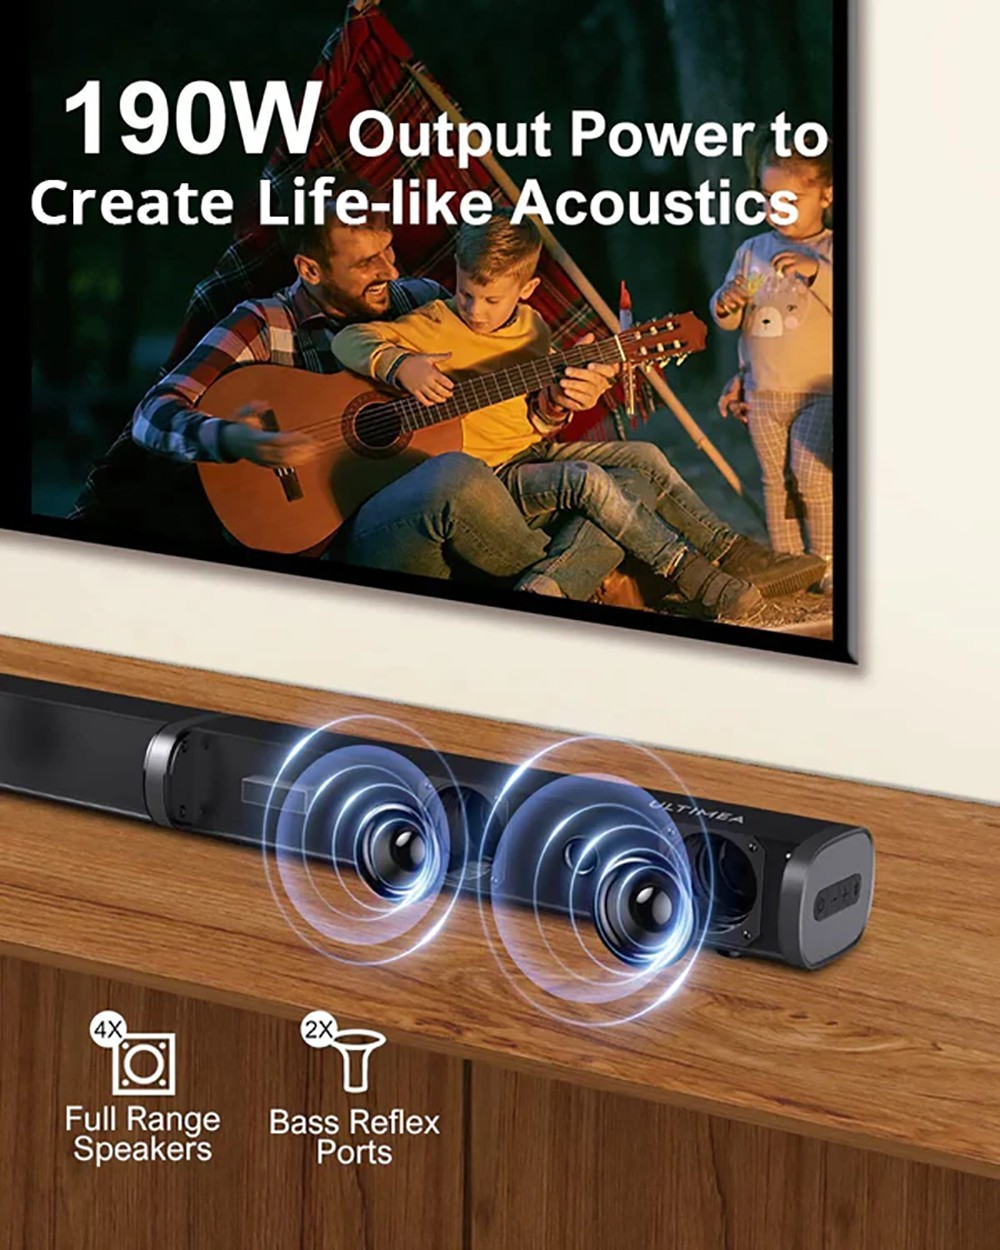 Ultimea Tapio VII 2.1 Wired Soundbar for TV Devices, 190 W 2.1 Soundbar with Subwoofer, 6 EQ Modes - Black